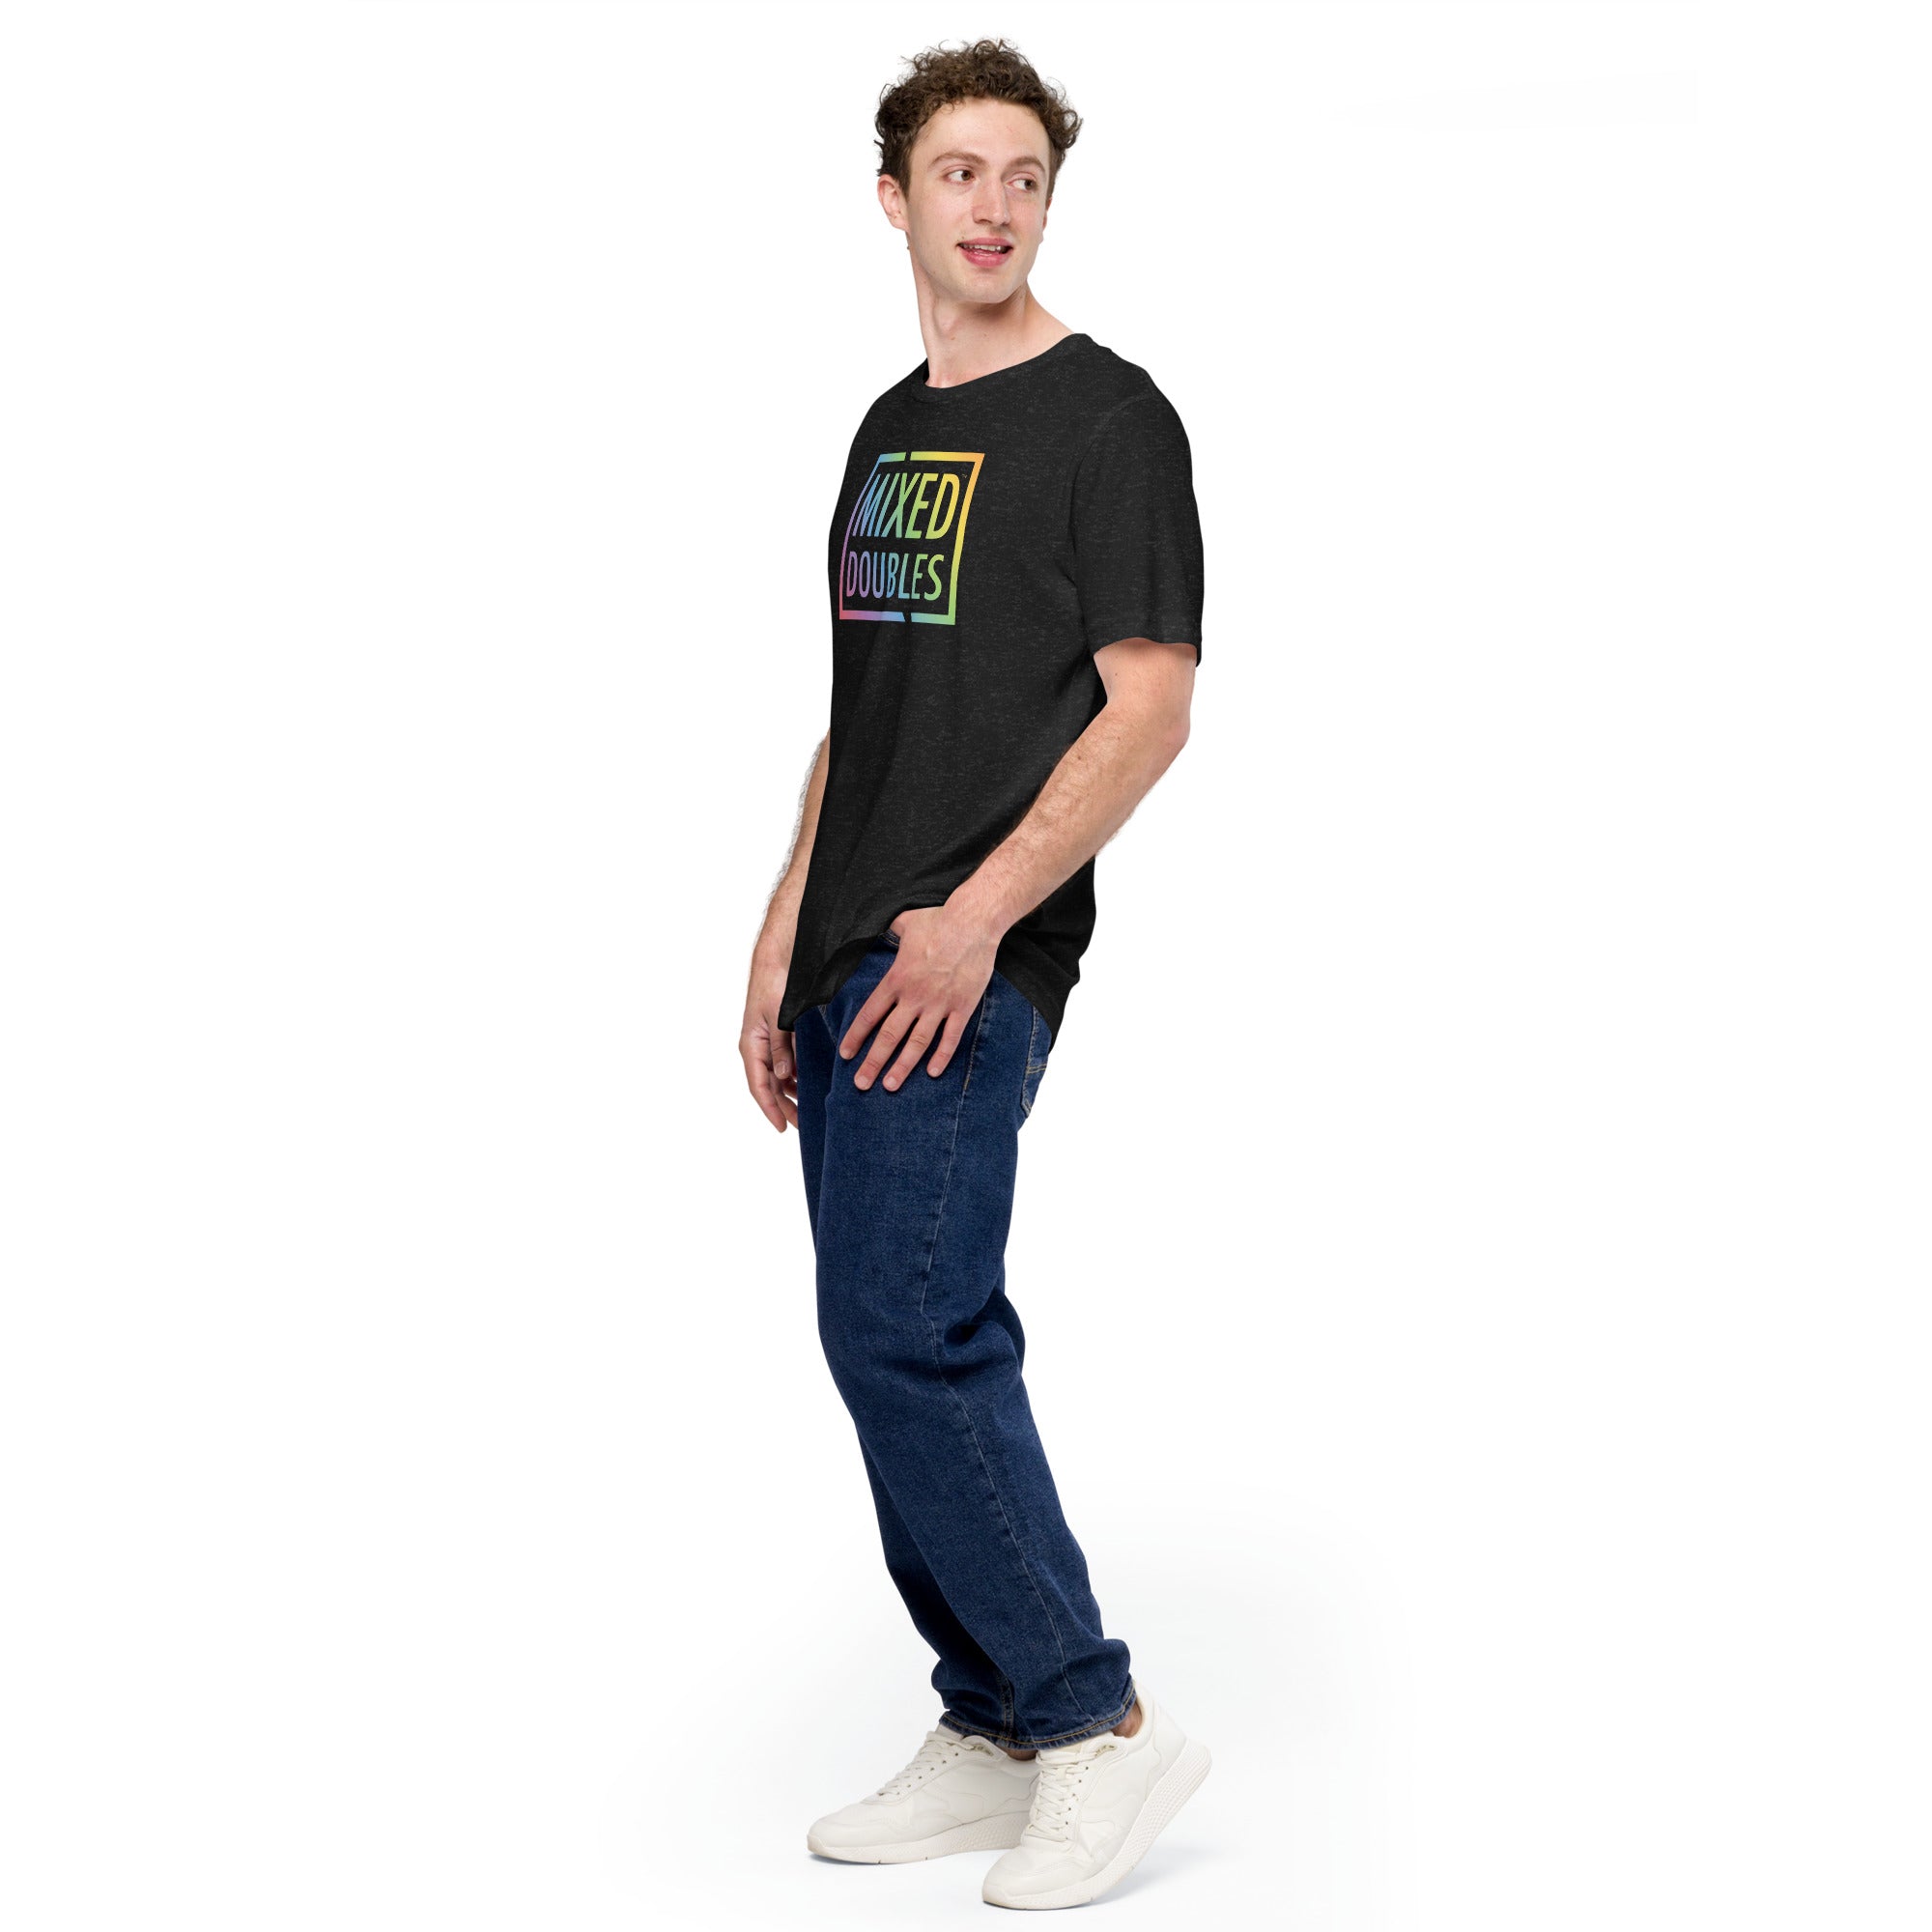 MIXED DOUBLES Short-Sleeve Unisex T-Shirt